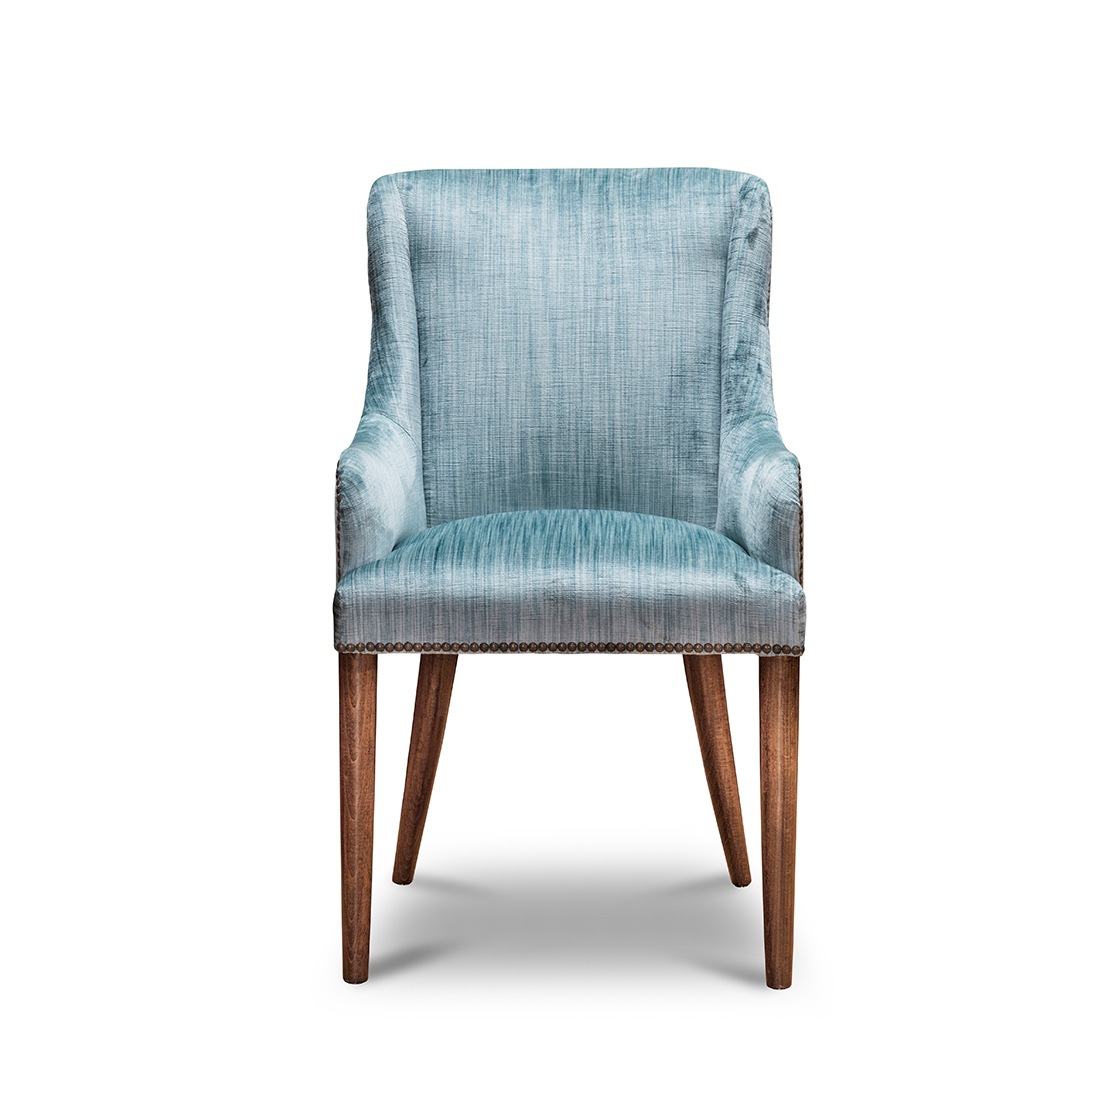 Calypso carver dining chair in Como silk velvet - Teal - Beaumont & Fletcher